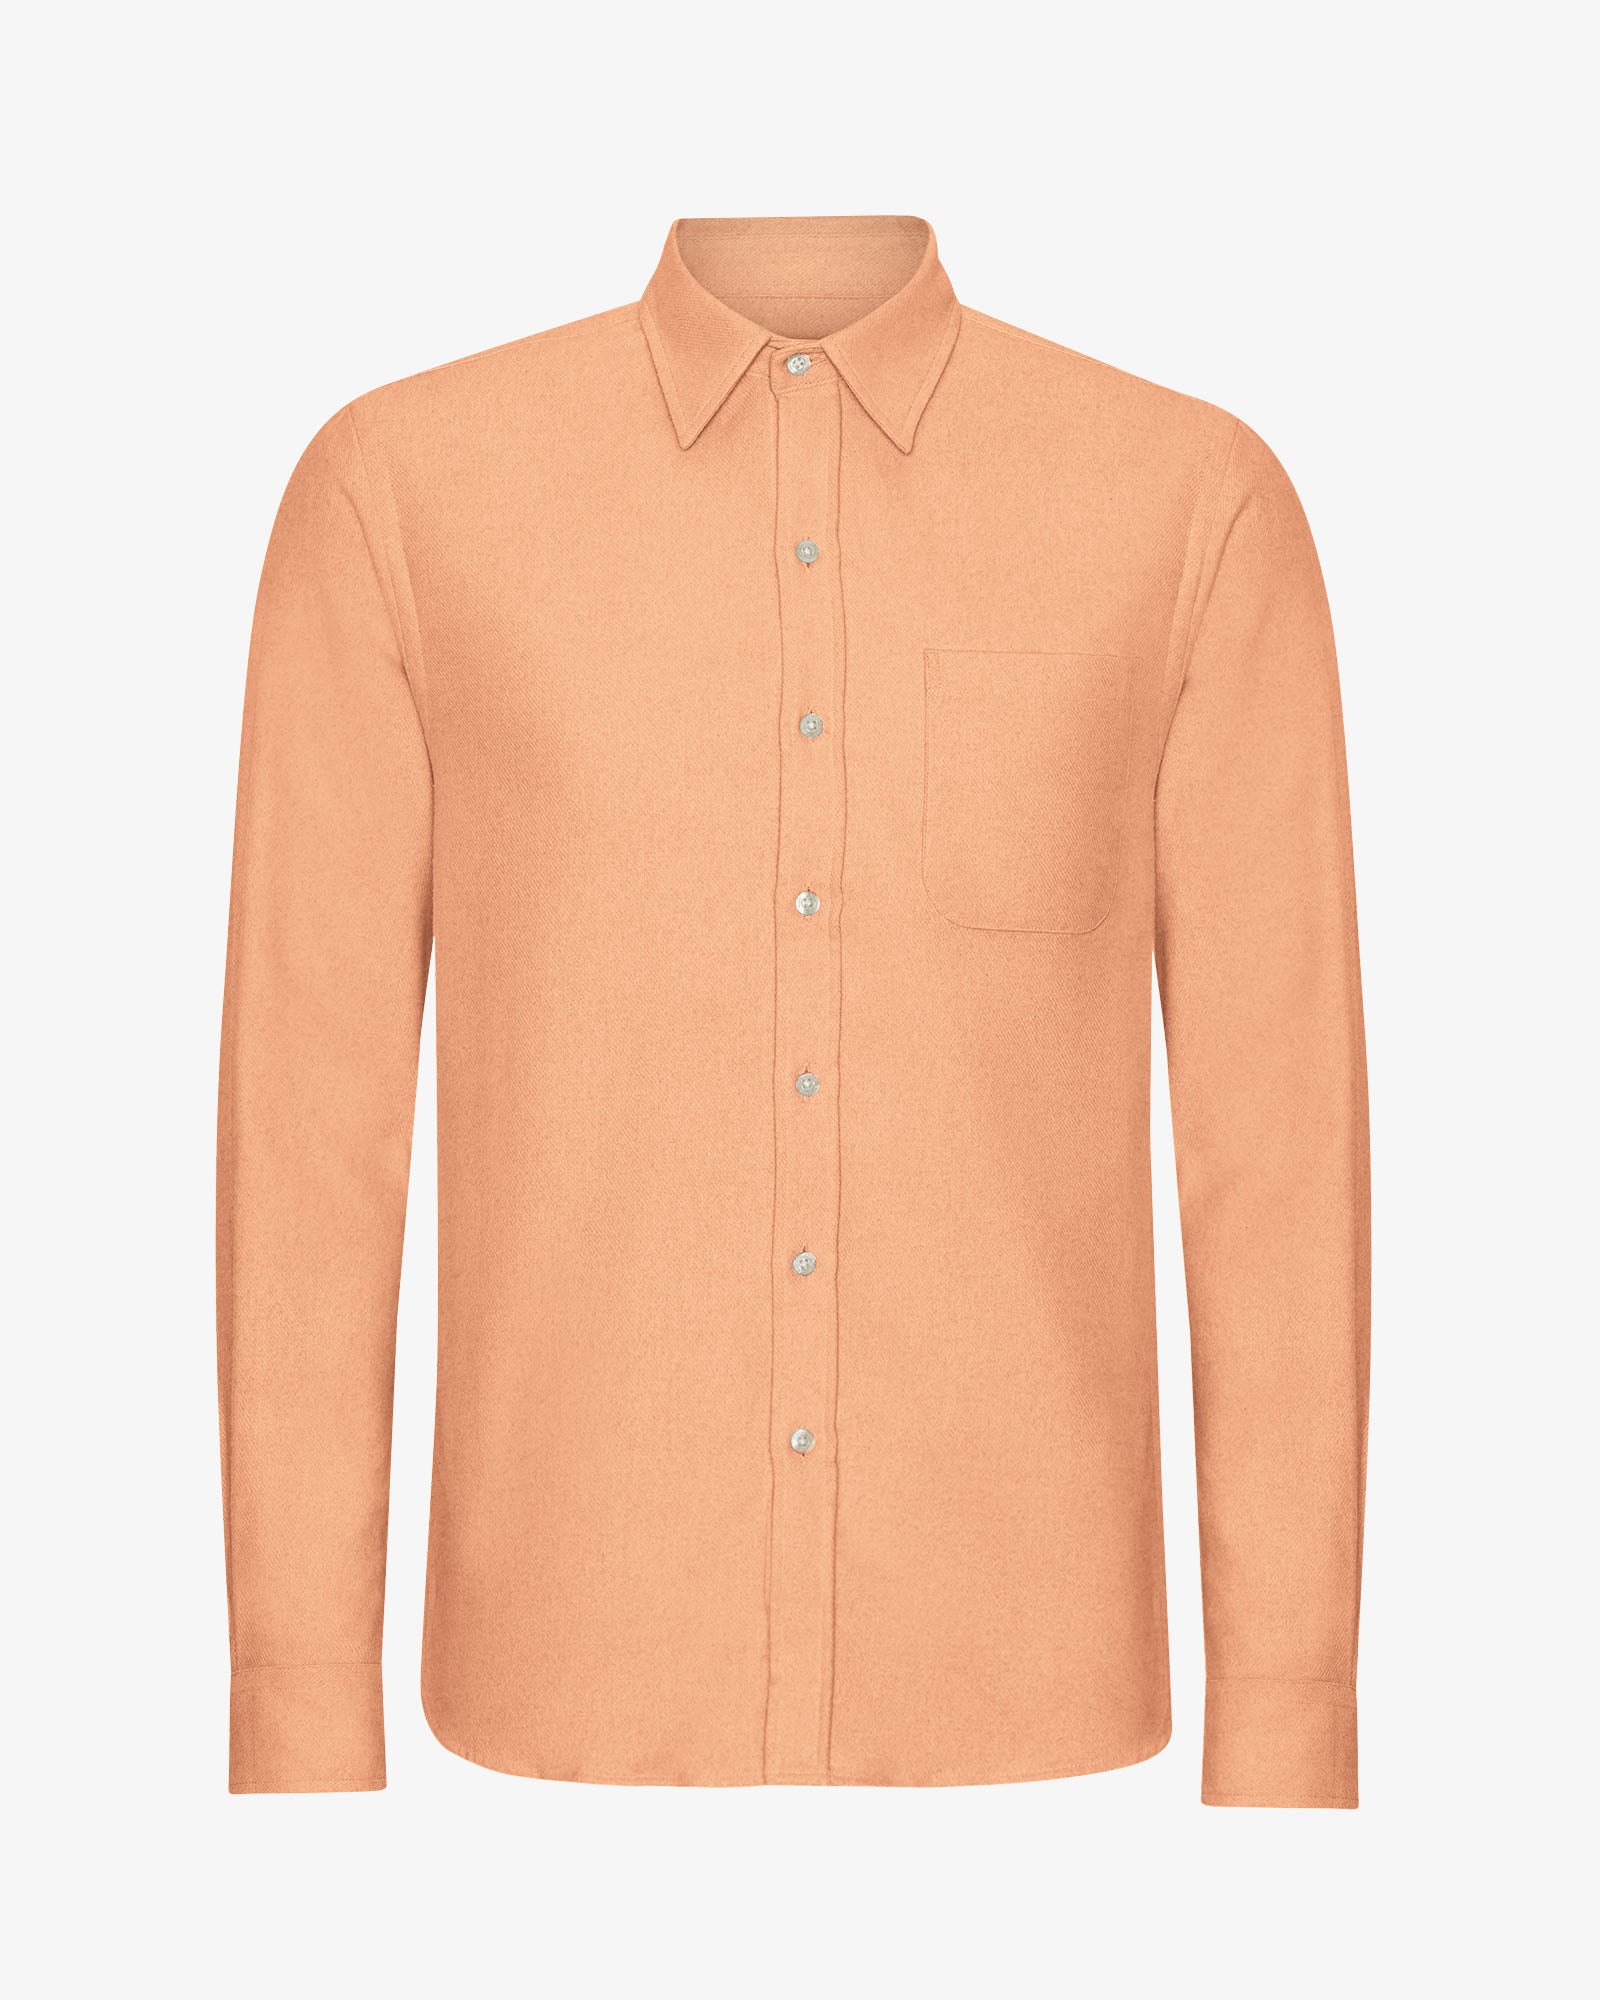 Organic Flannel Shirt - Sandstone Orange